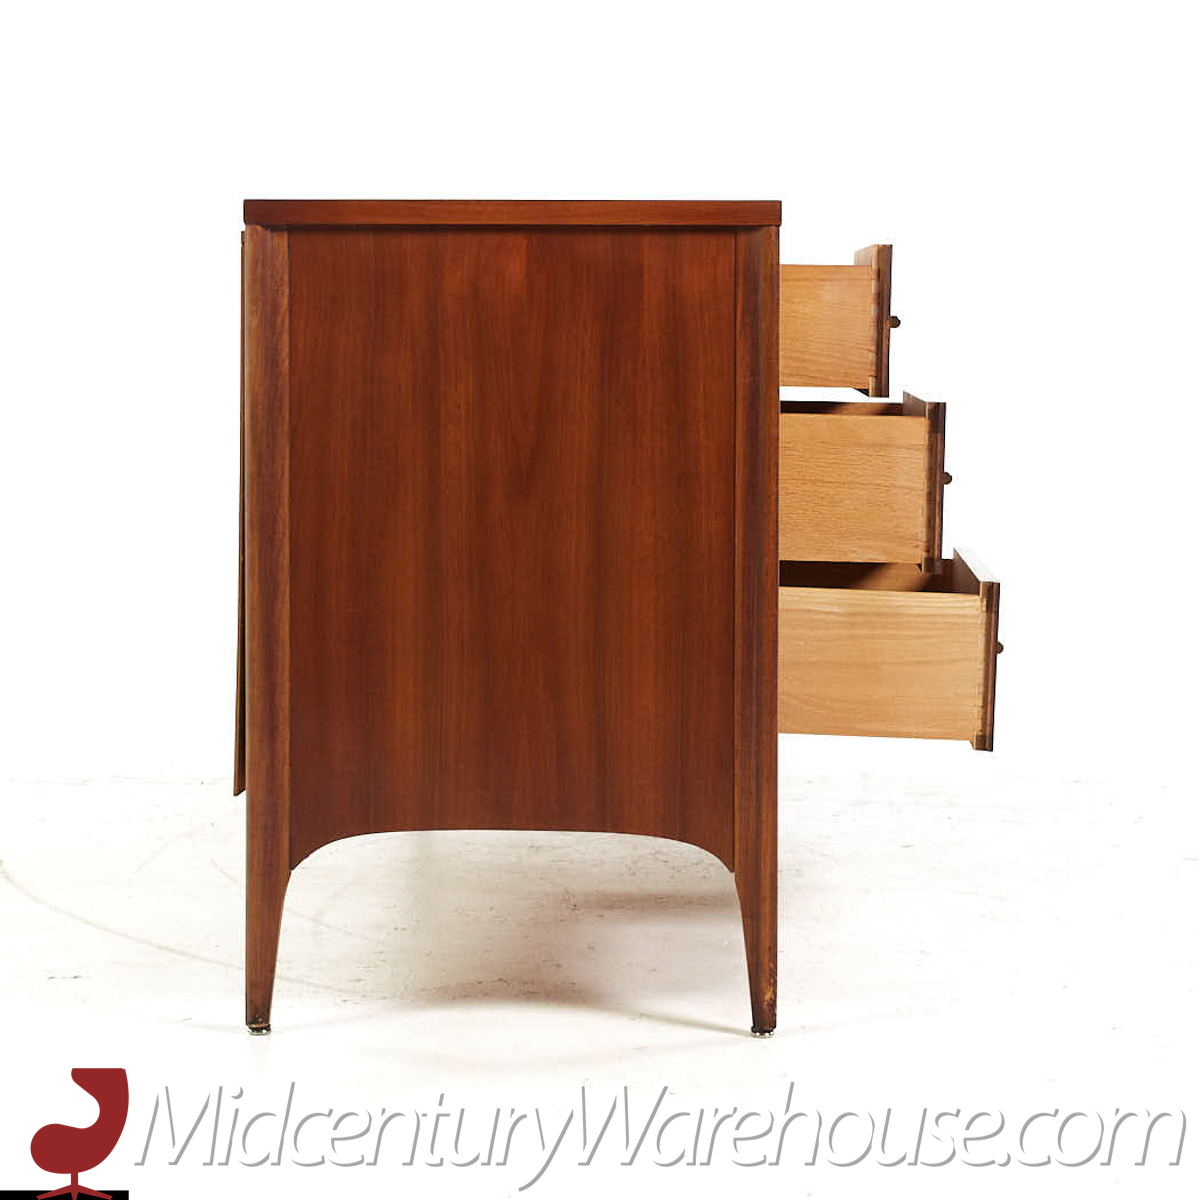 Kent Coffey Perspecta Mid Century 12-drawer Lowboy Dresser